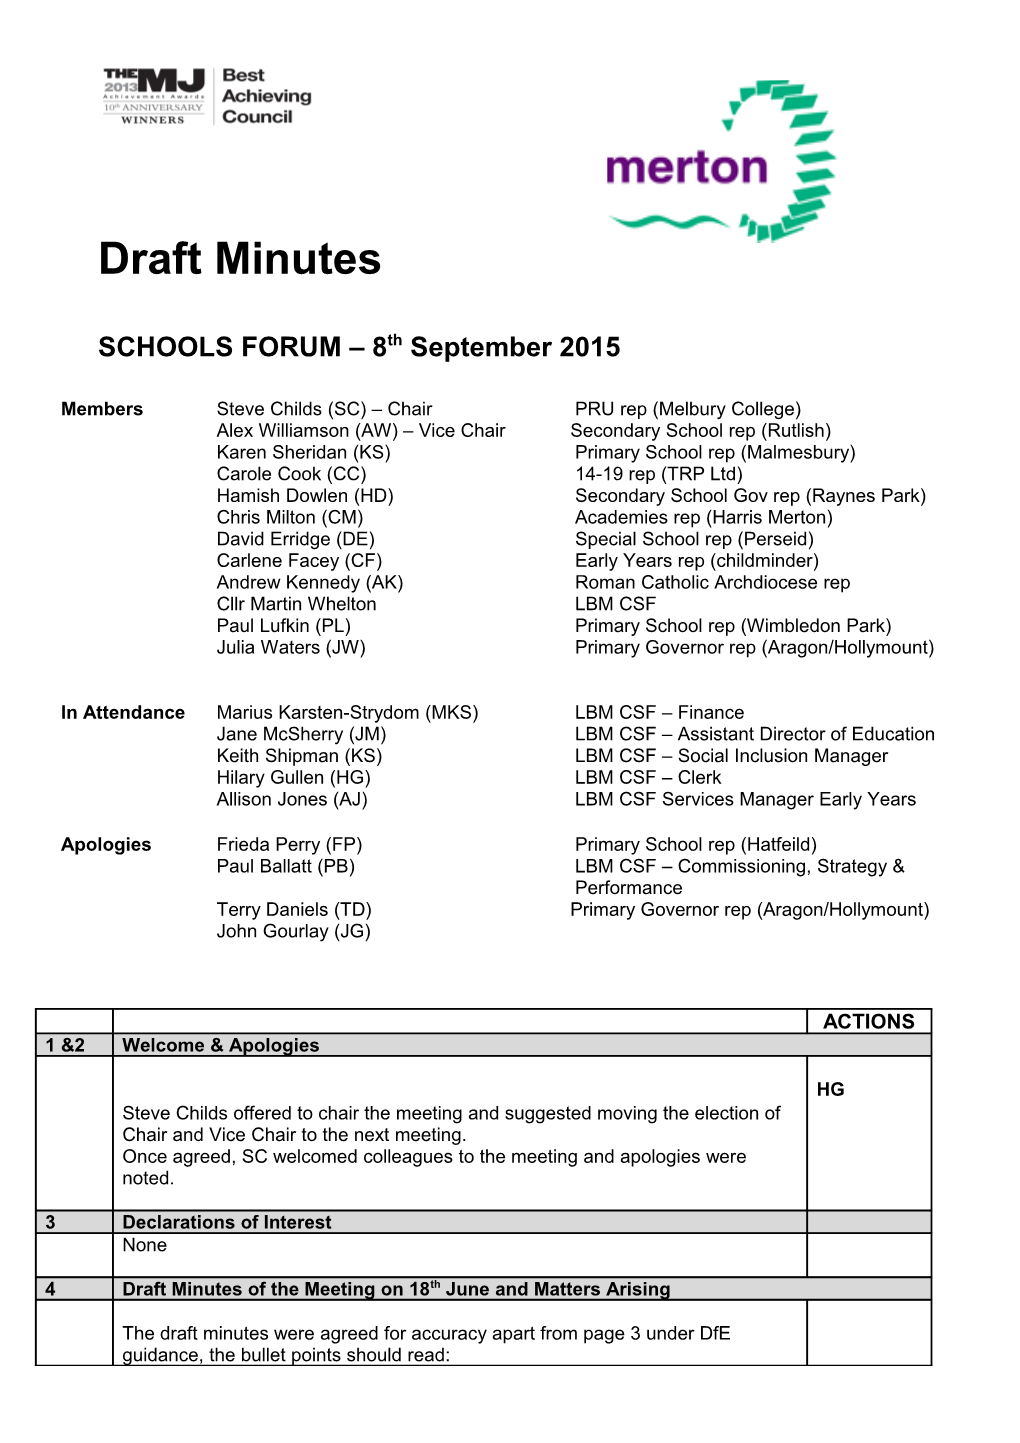 Draft Minutes s4